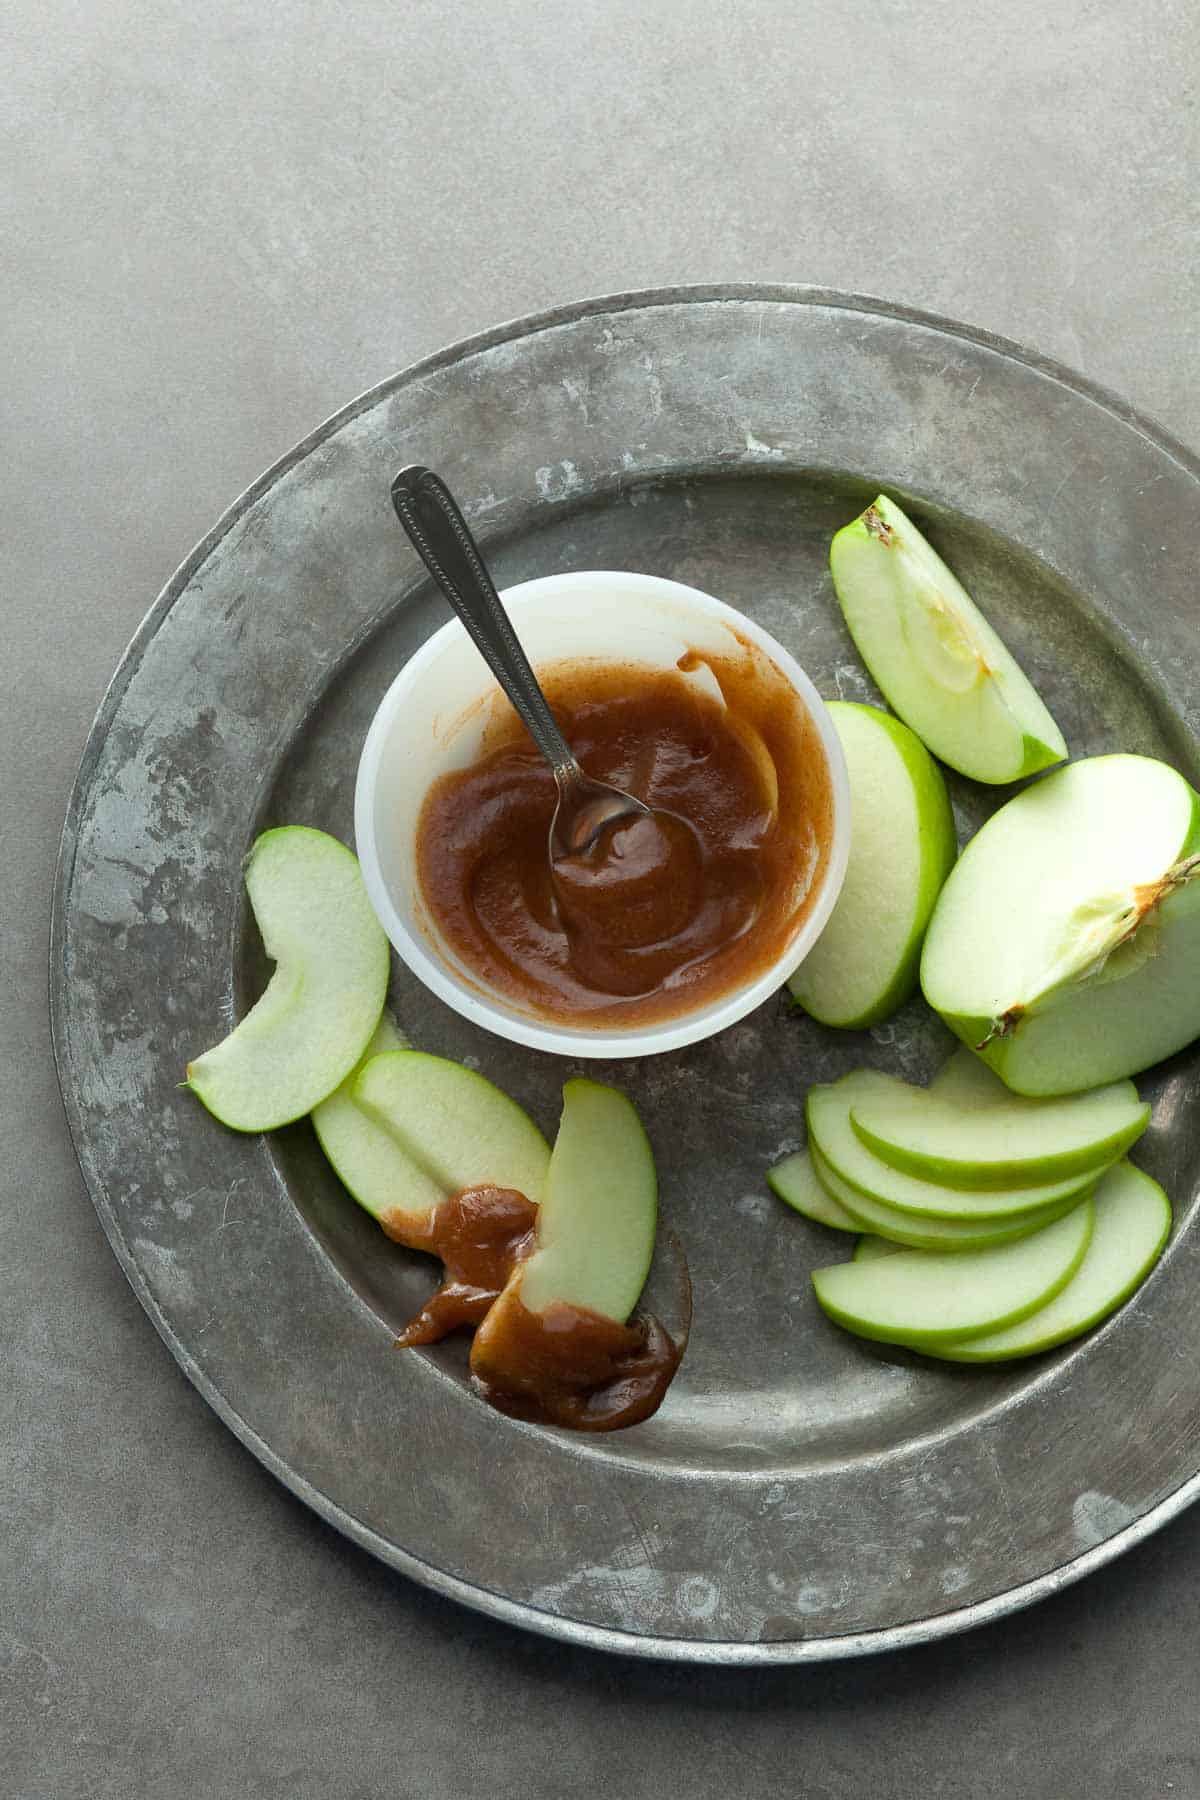 Date Caramel Sauce on Apple Slices